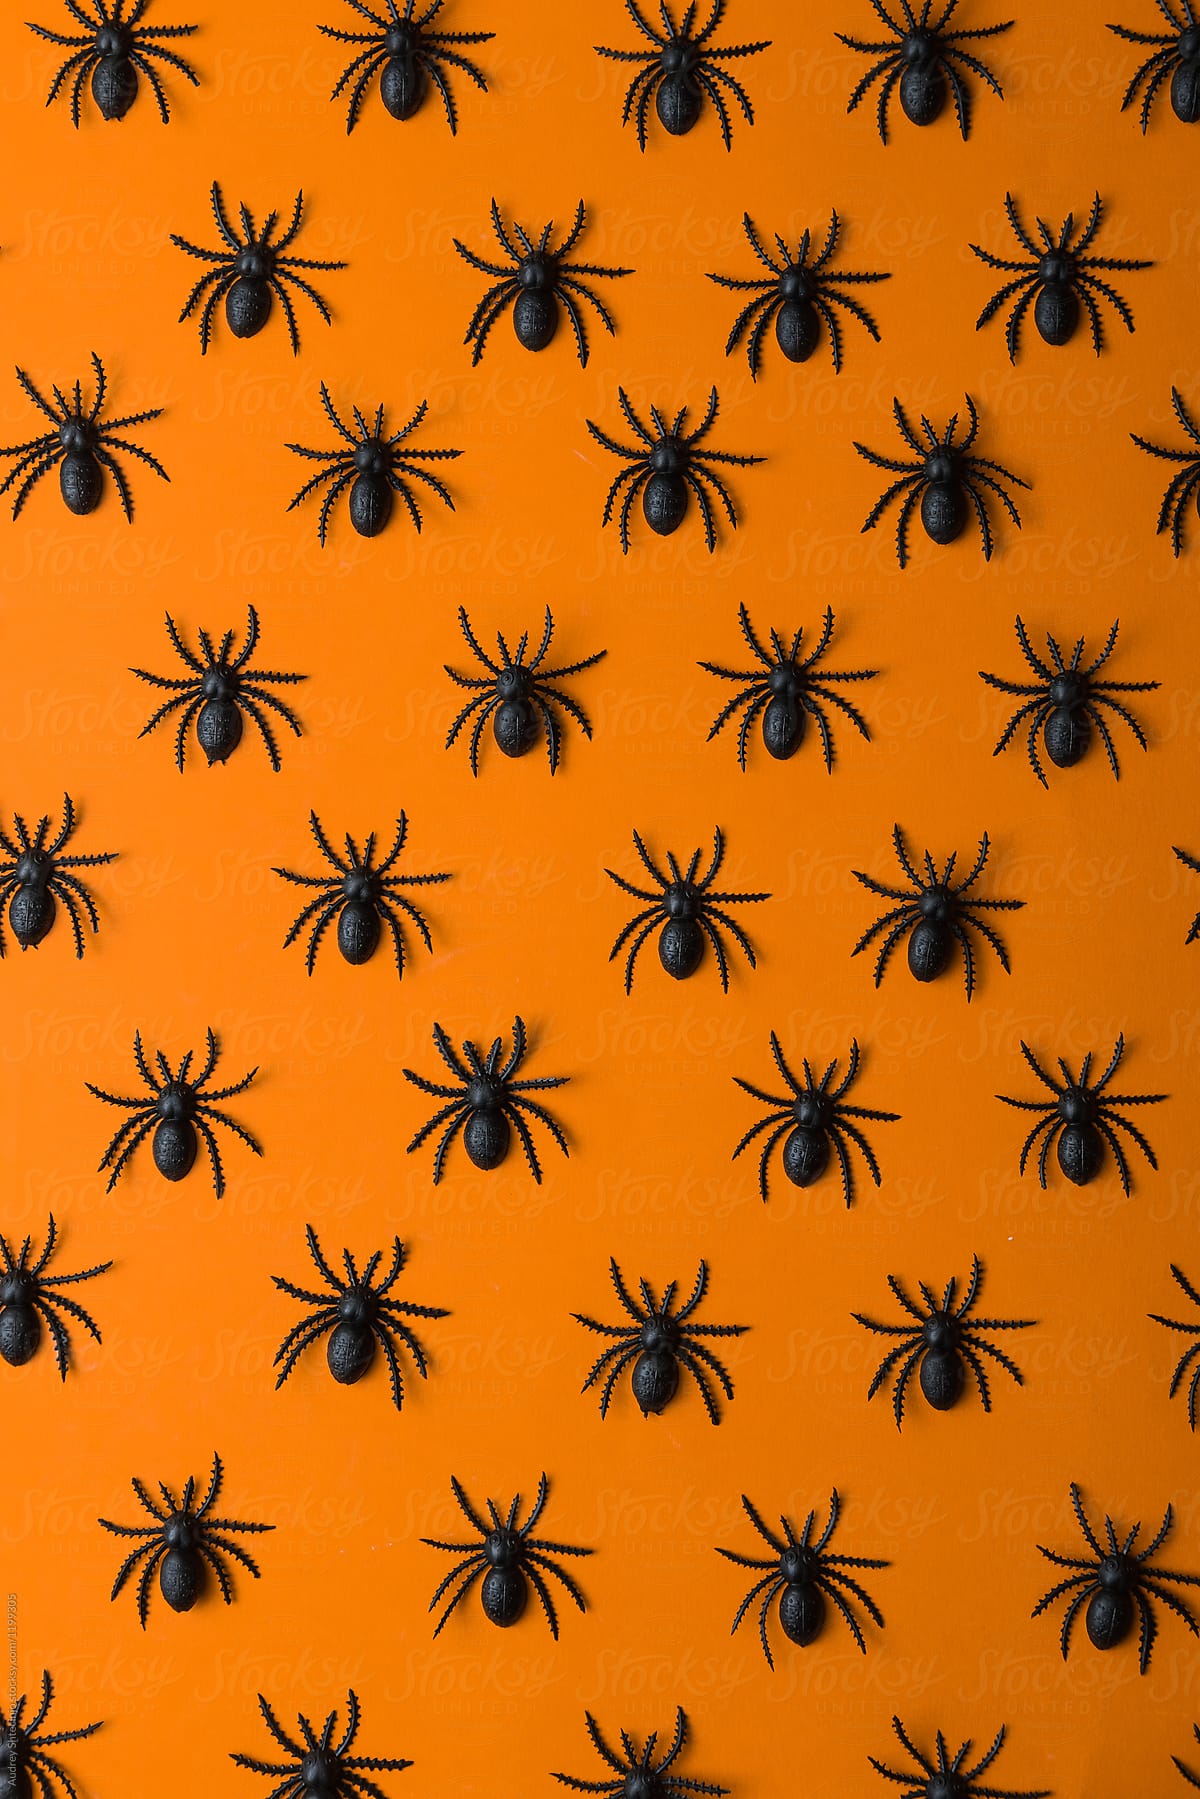 Small black spiders on orange background/miniature.